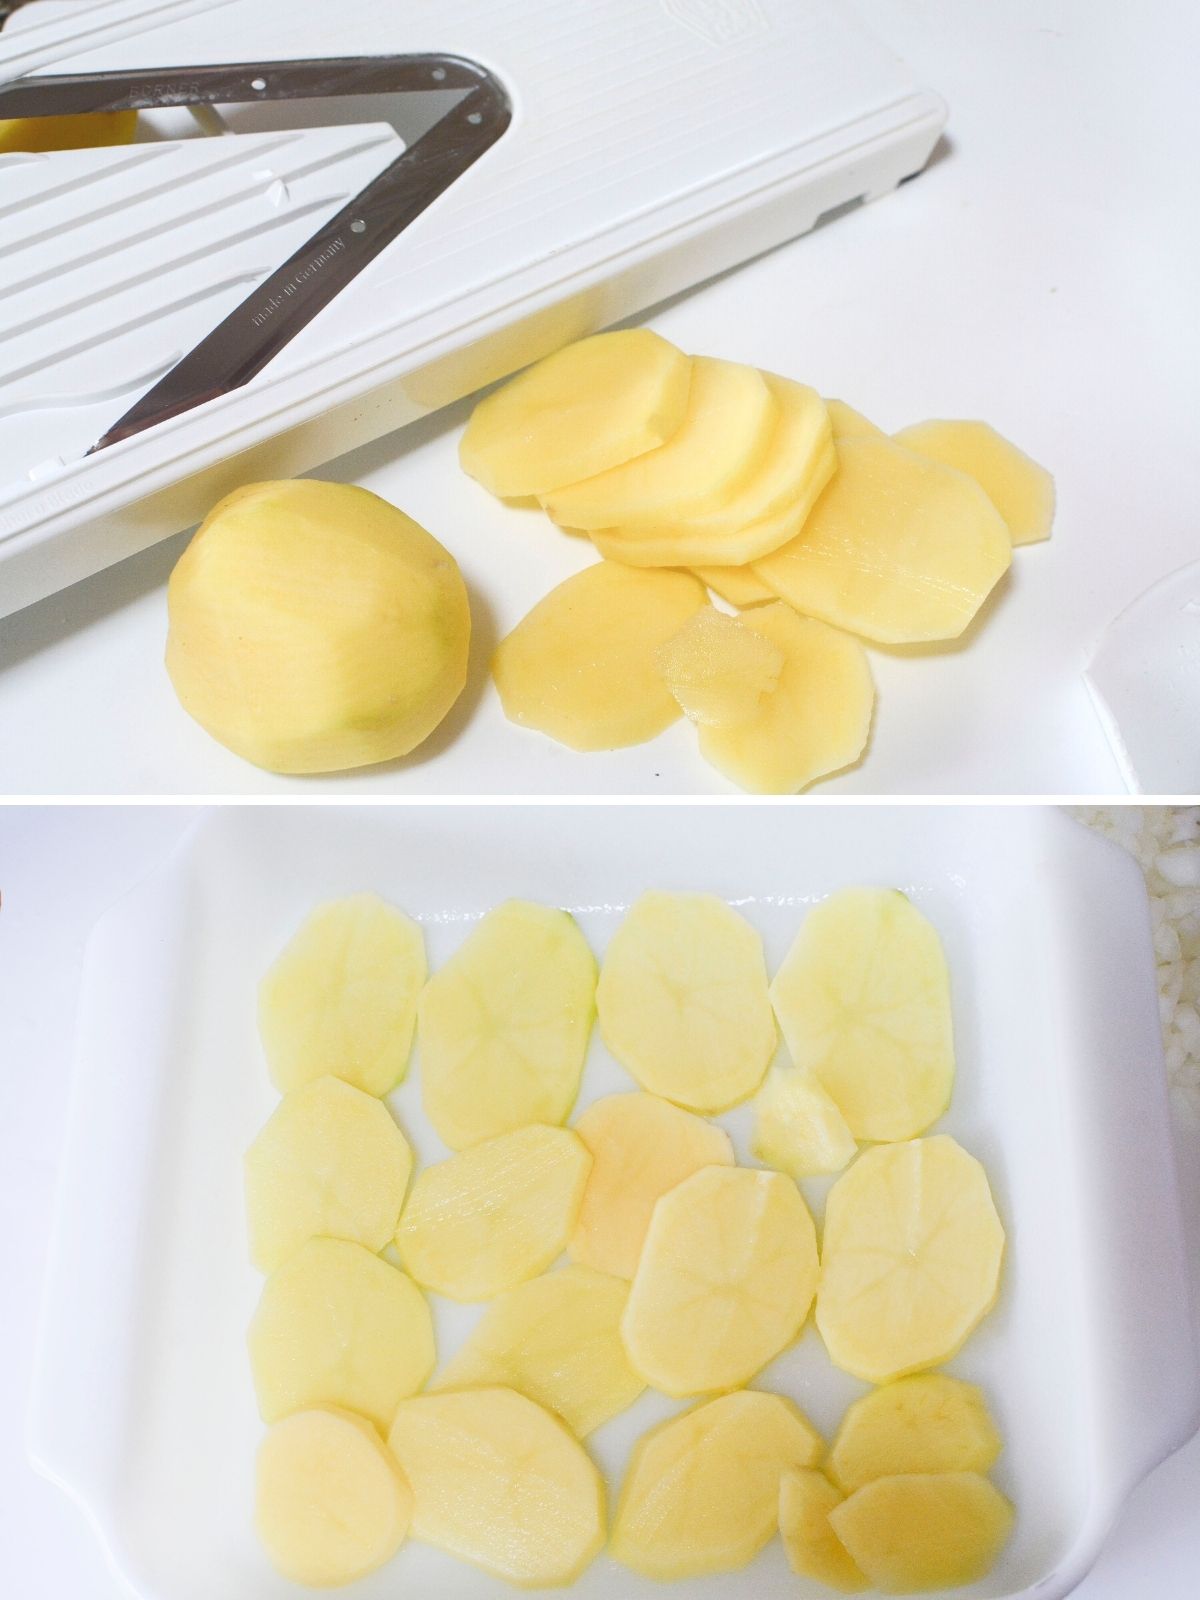 Thin sliced potatoes.